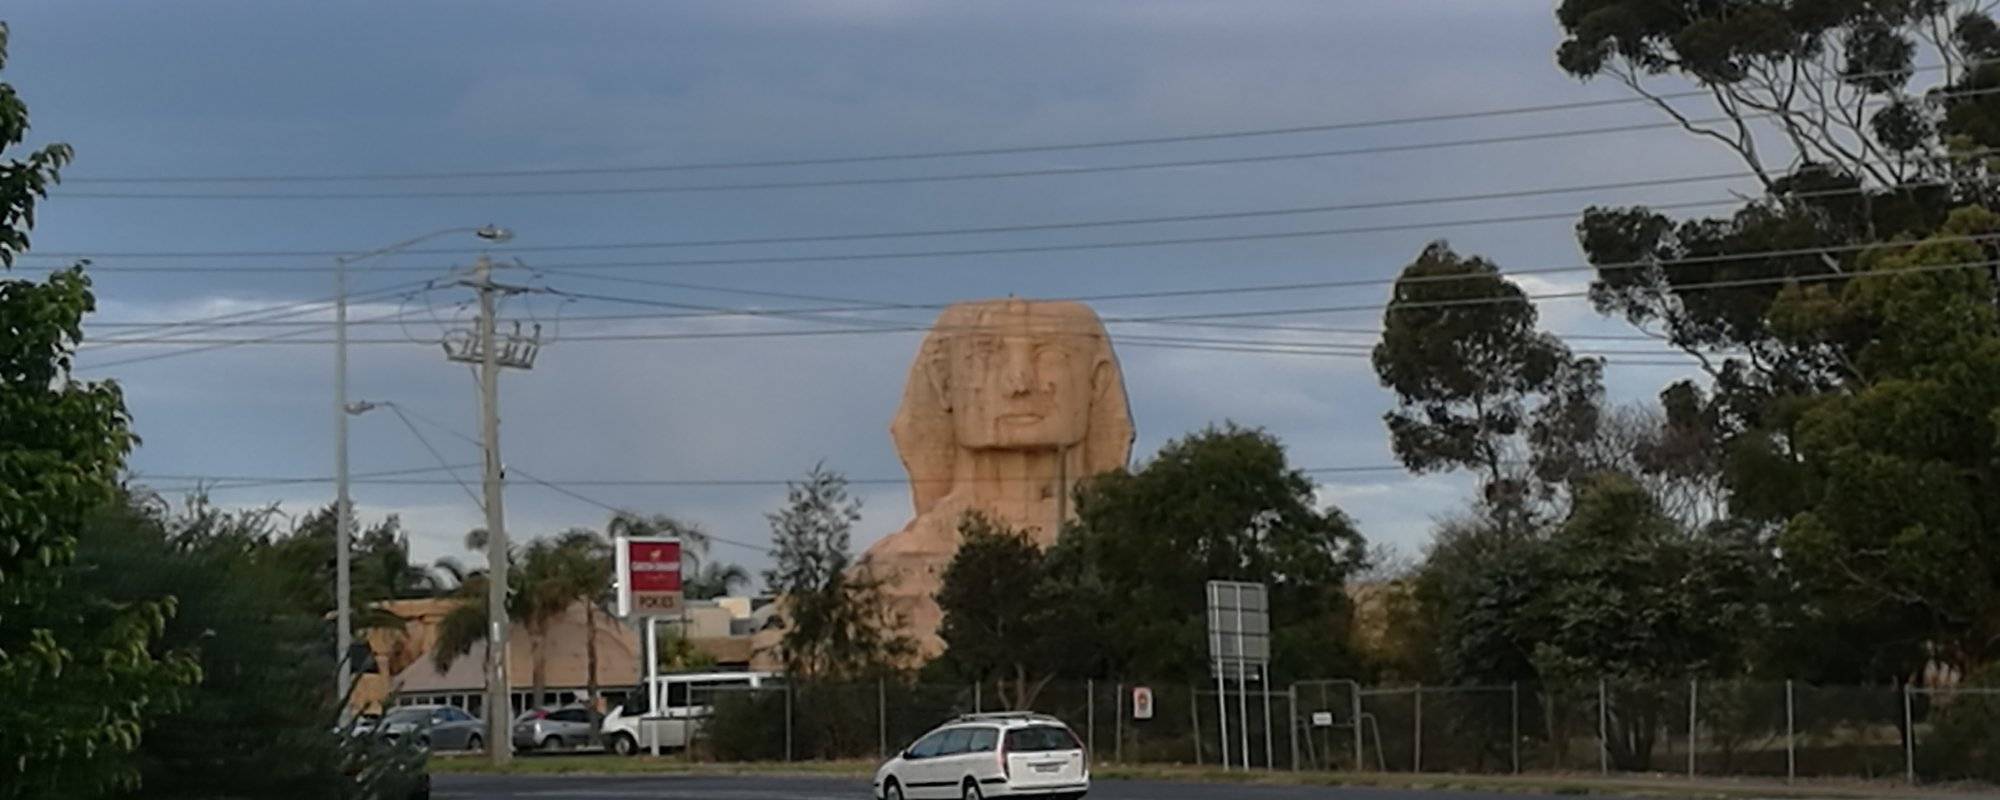 The Sphinx hotel - Geelong Australia